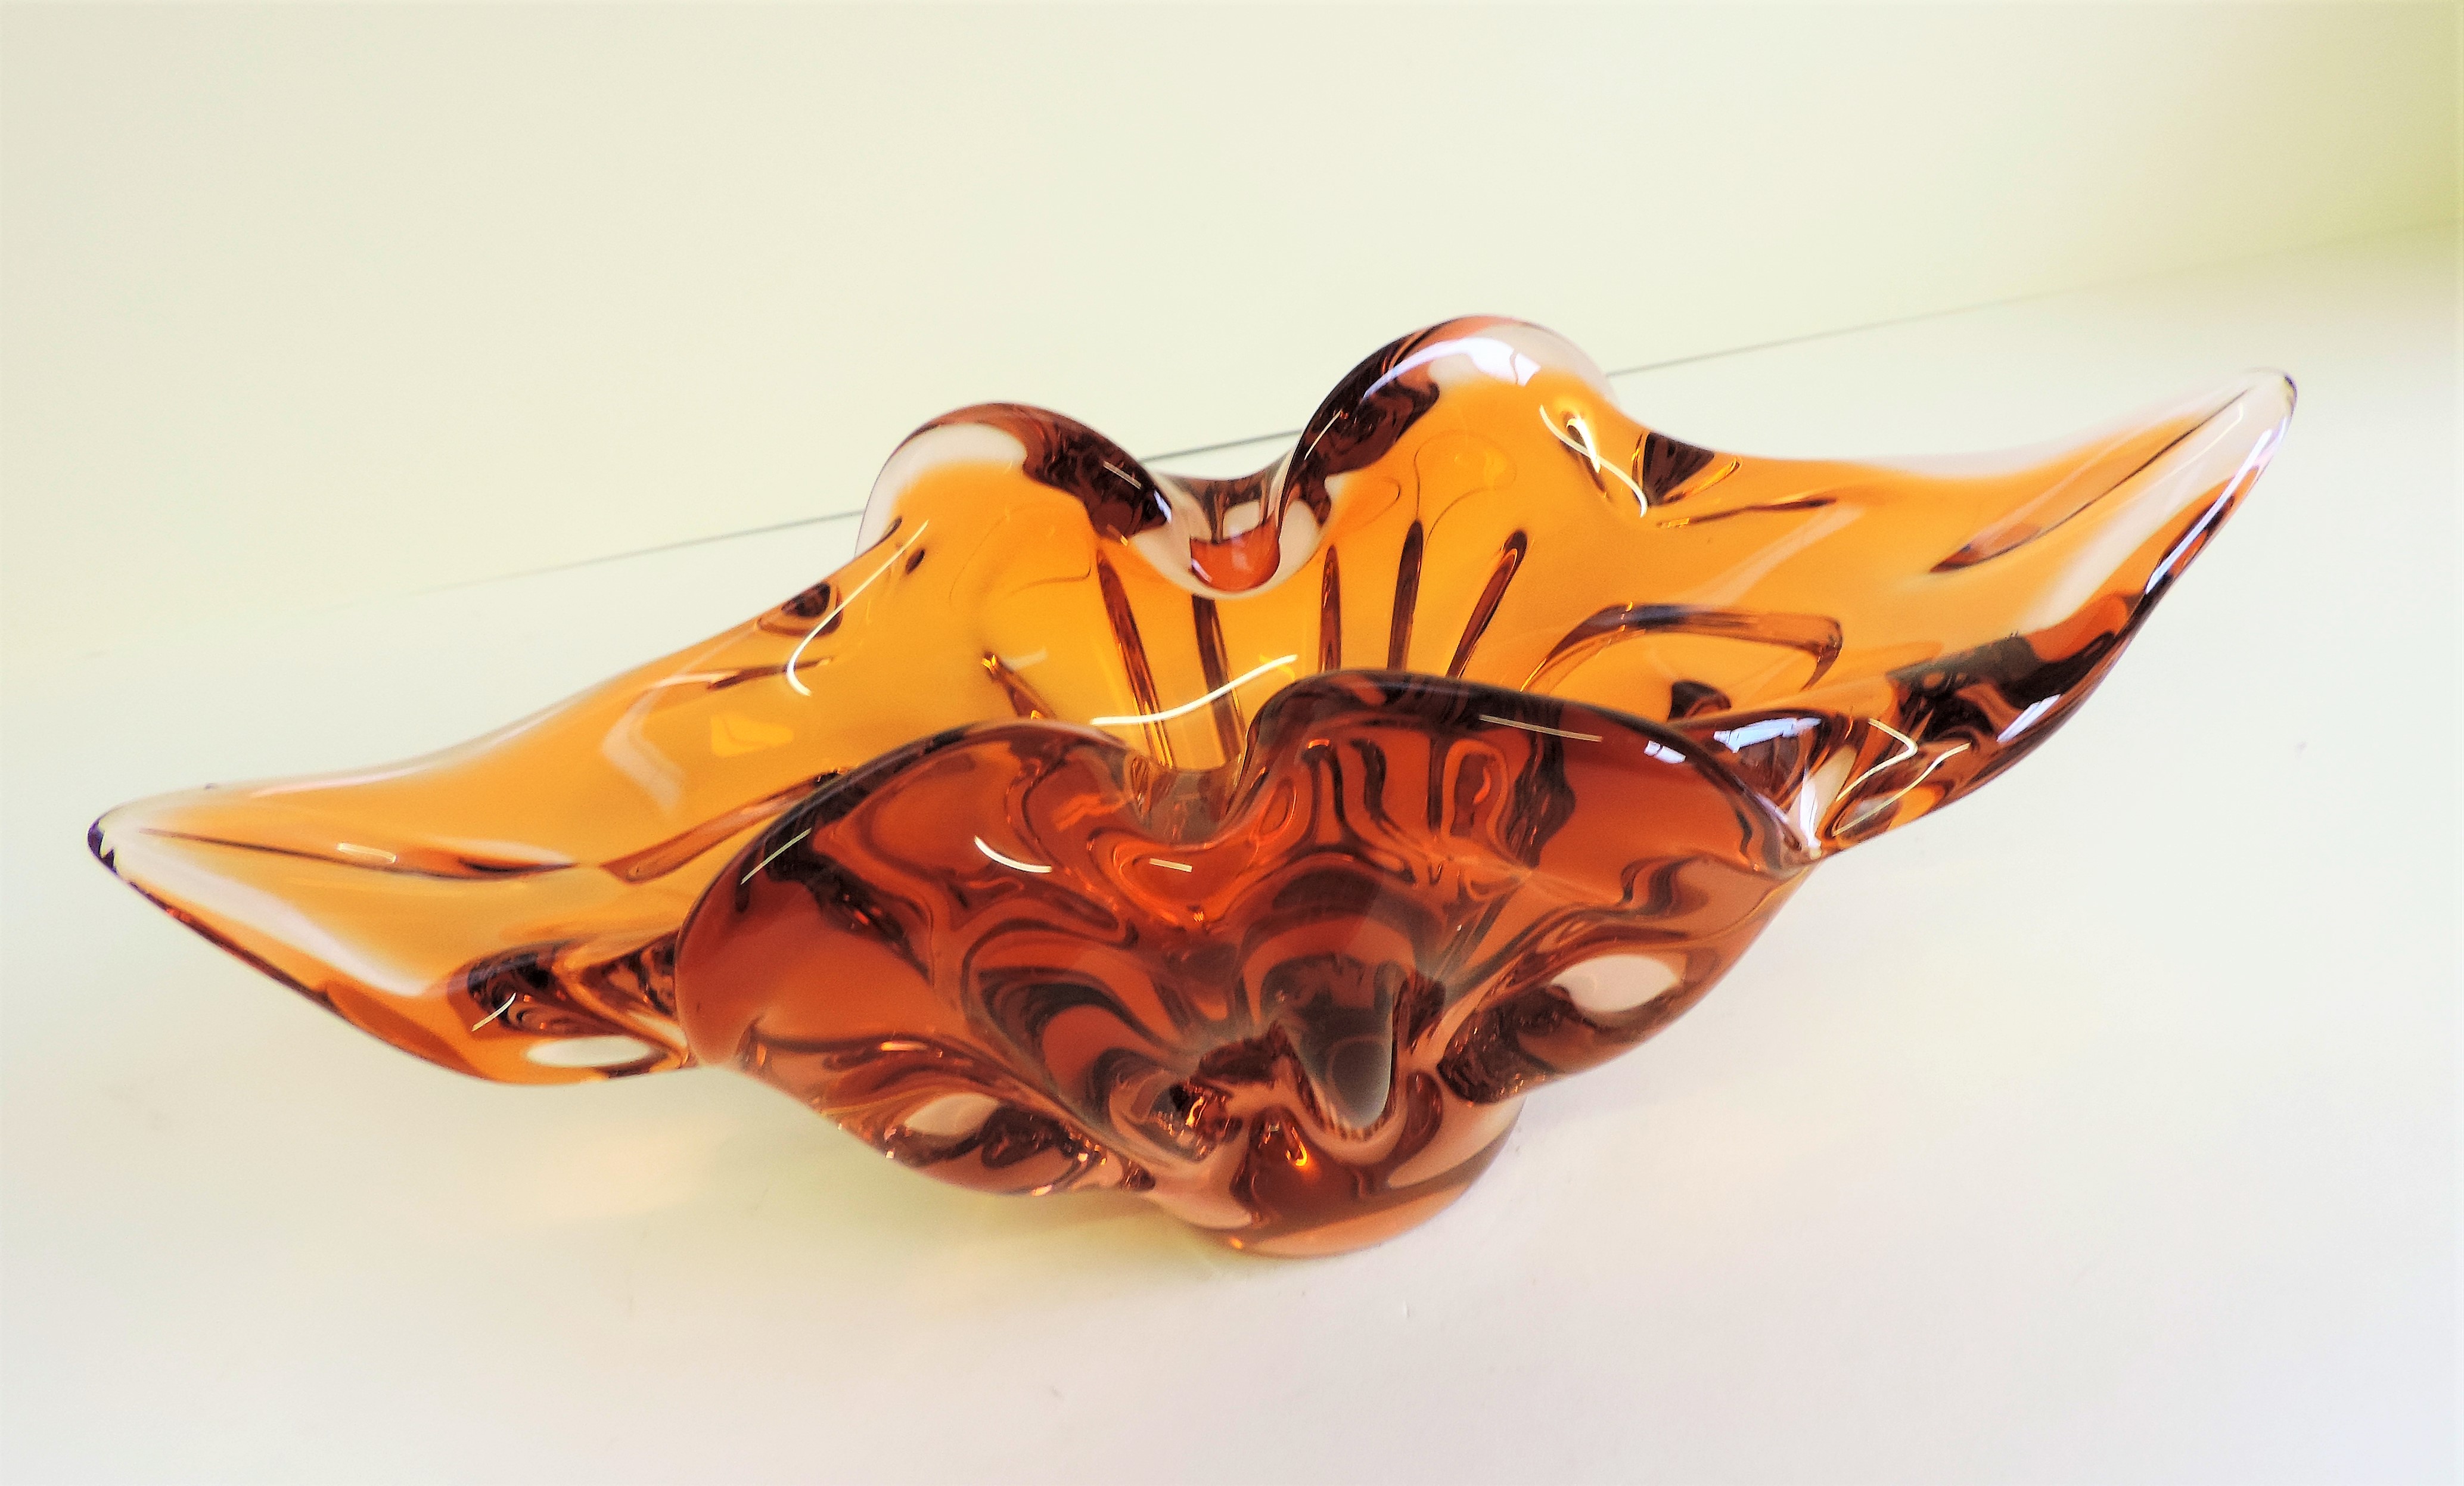 Chribska Czech Amber Glass Bowl by Josef Hospodka - Image 4 of 5